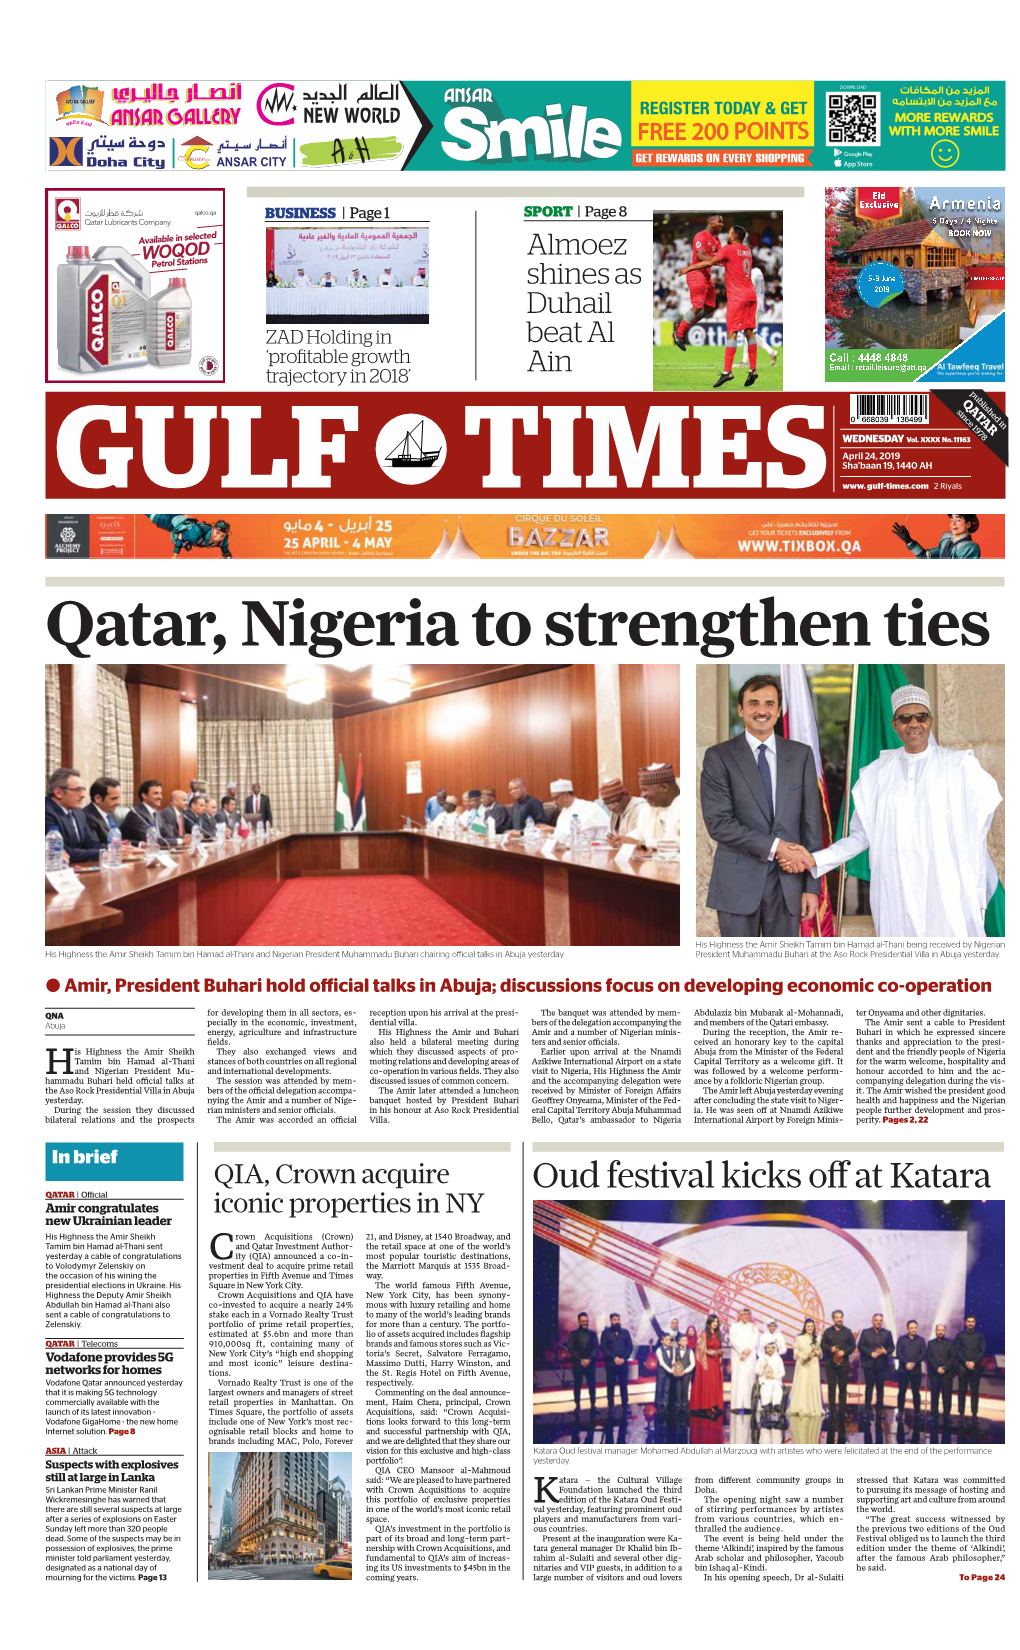 Qatar, Nigeria to Strengthen Ties